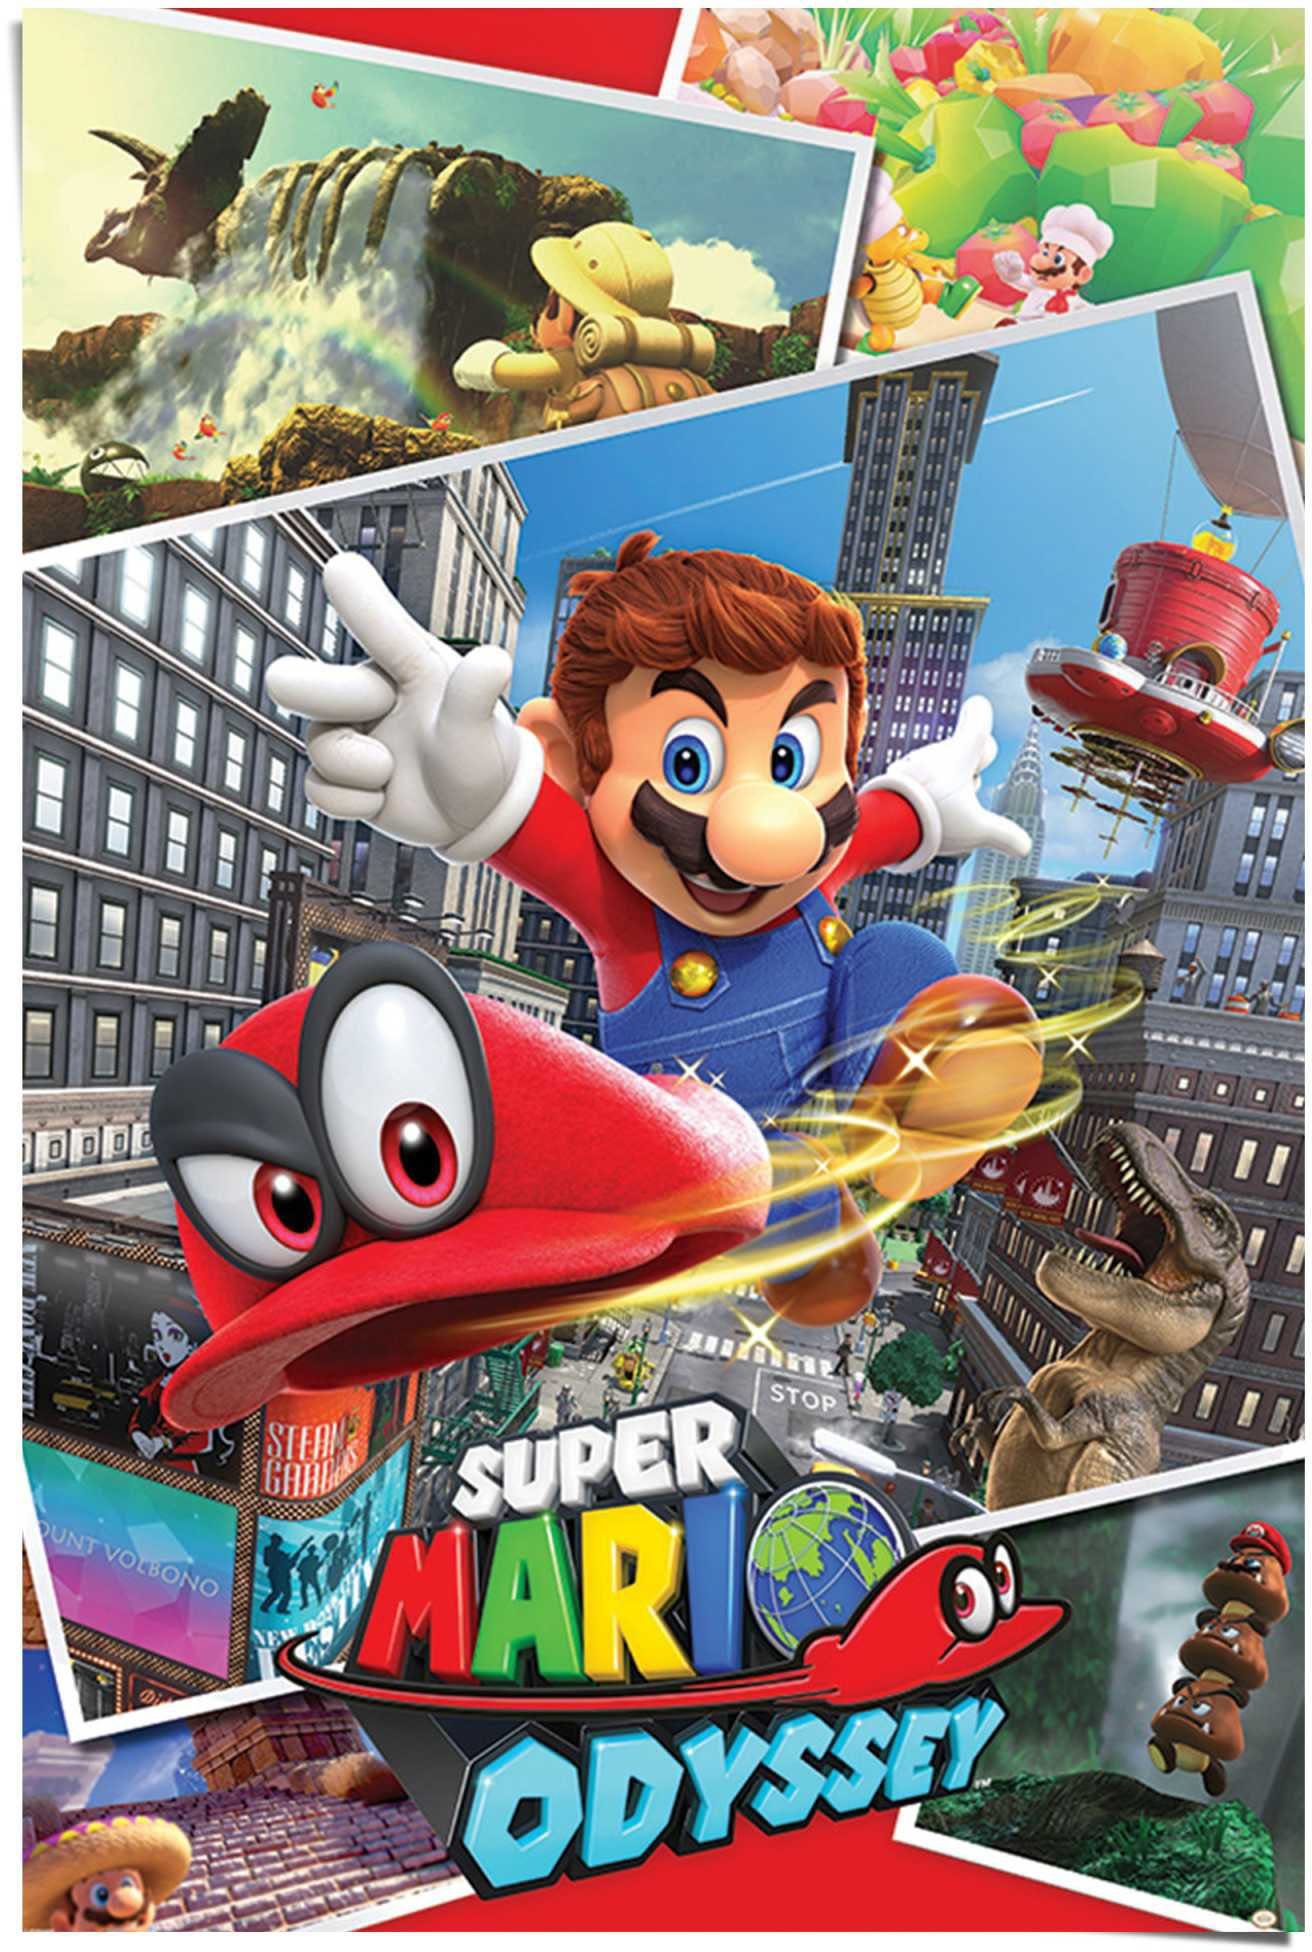 Reinders! Poster Super Mario Odyssey (1 stuk)